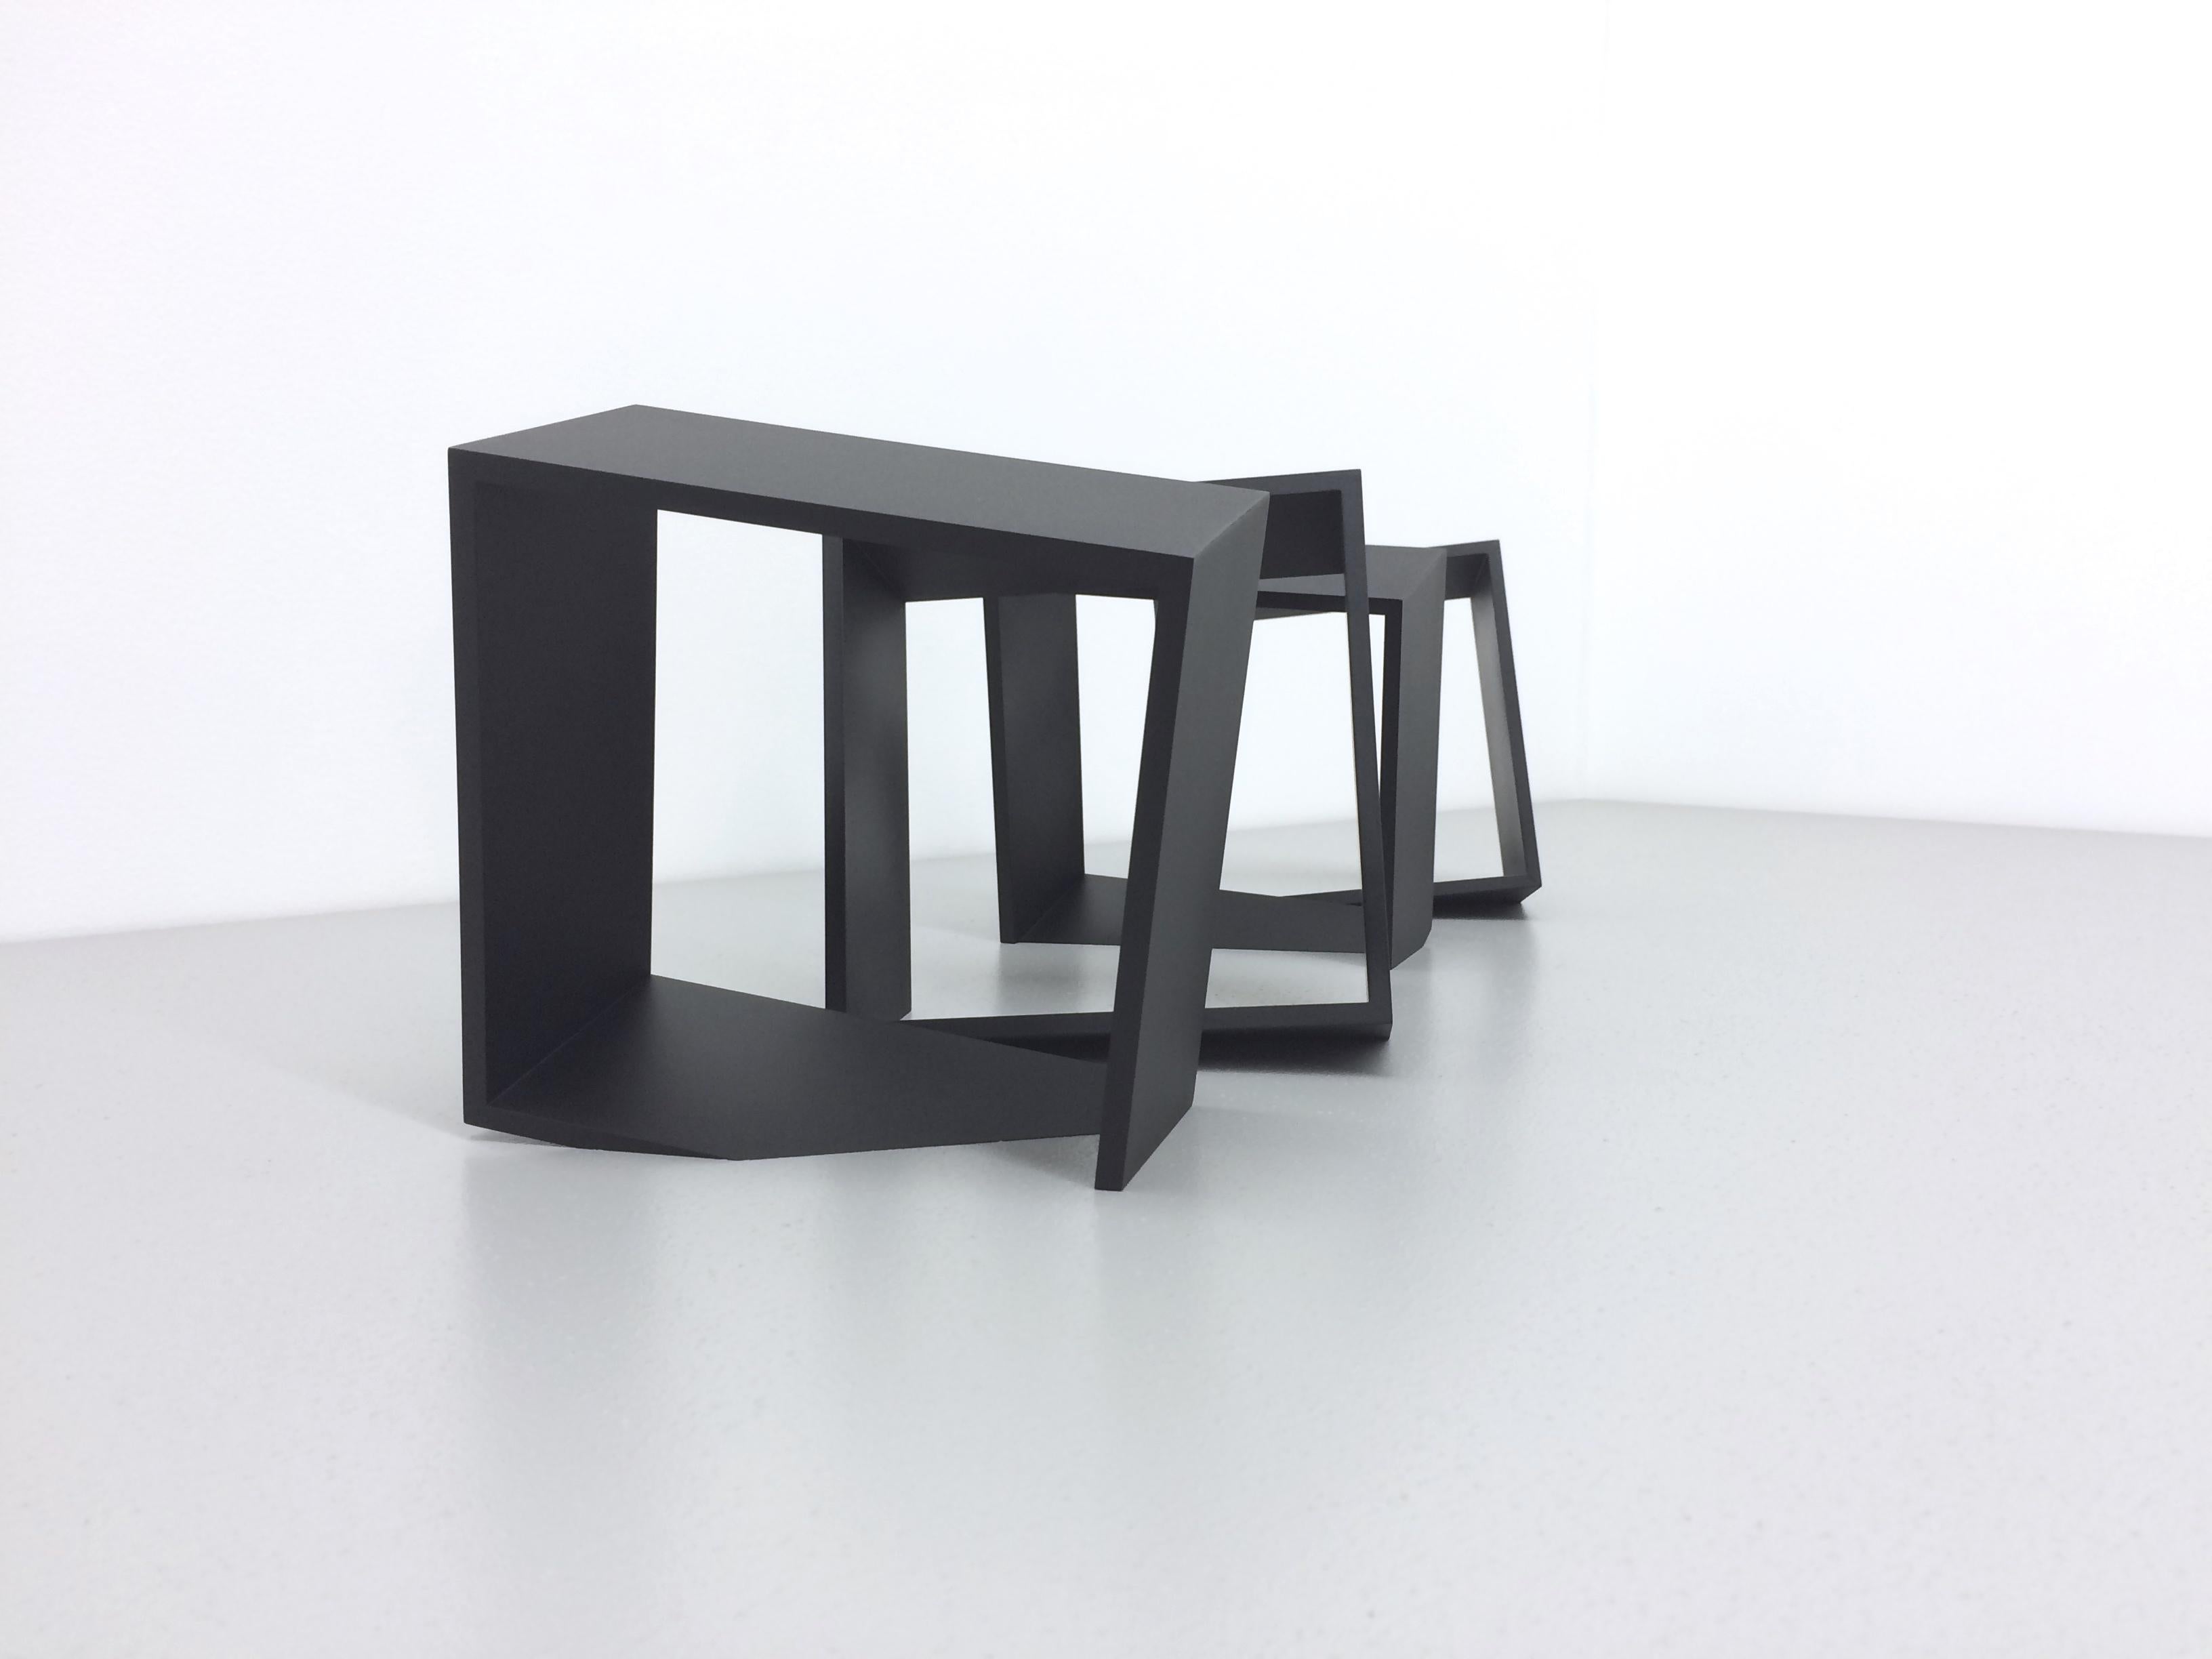 Thomas Lendvai Abstract Sculpture - Untitled (4 black units)